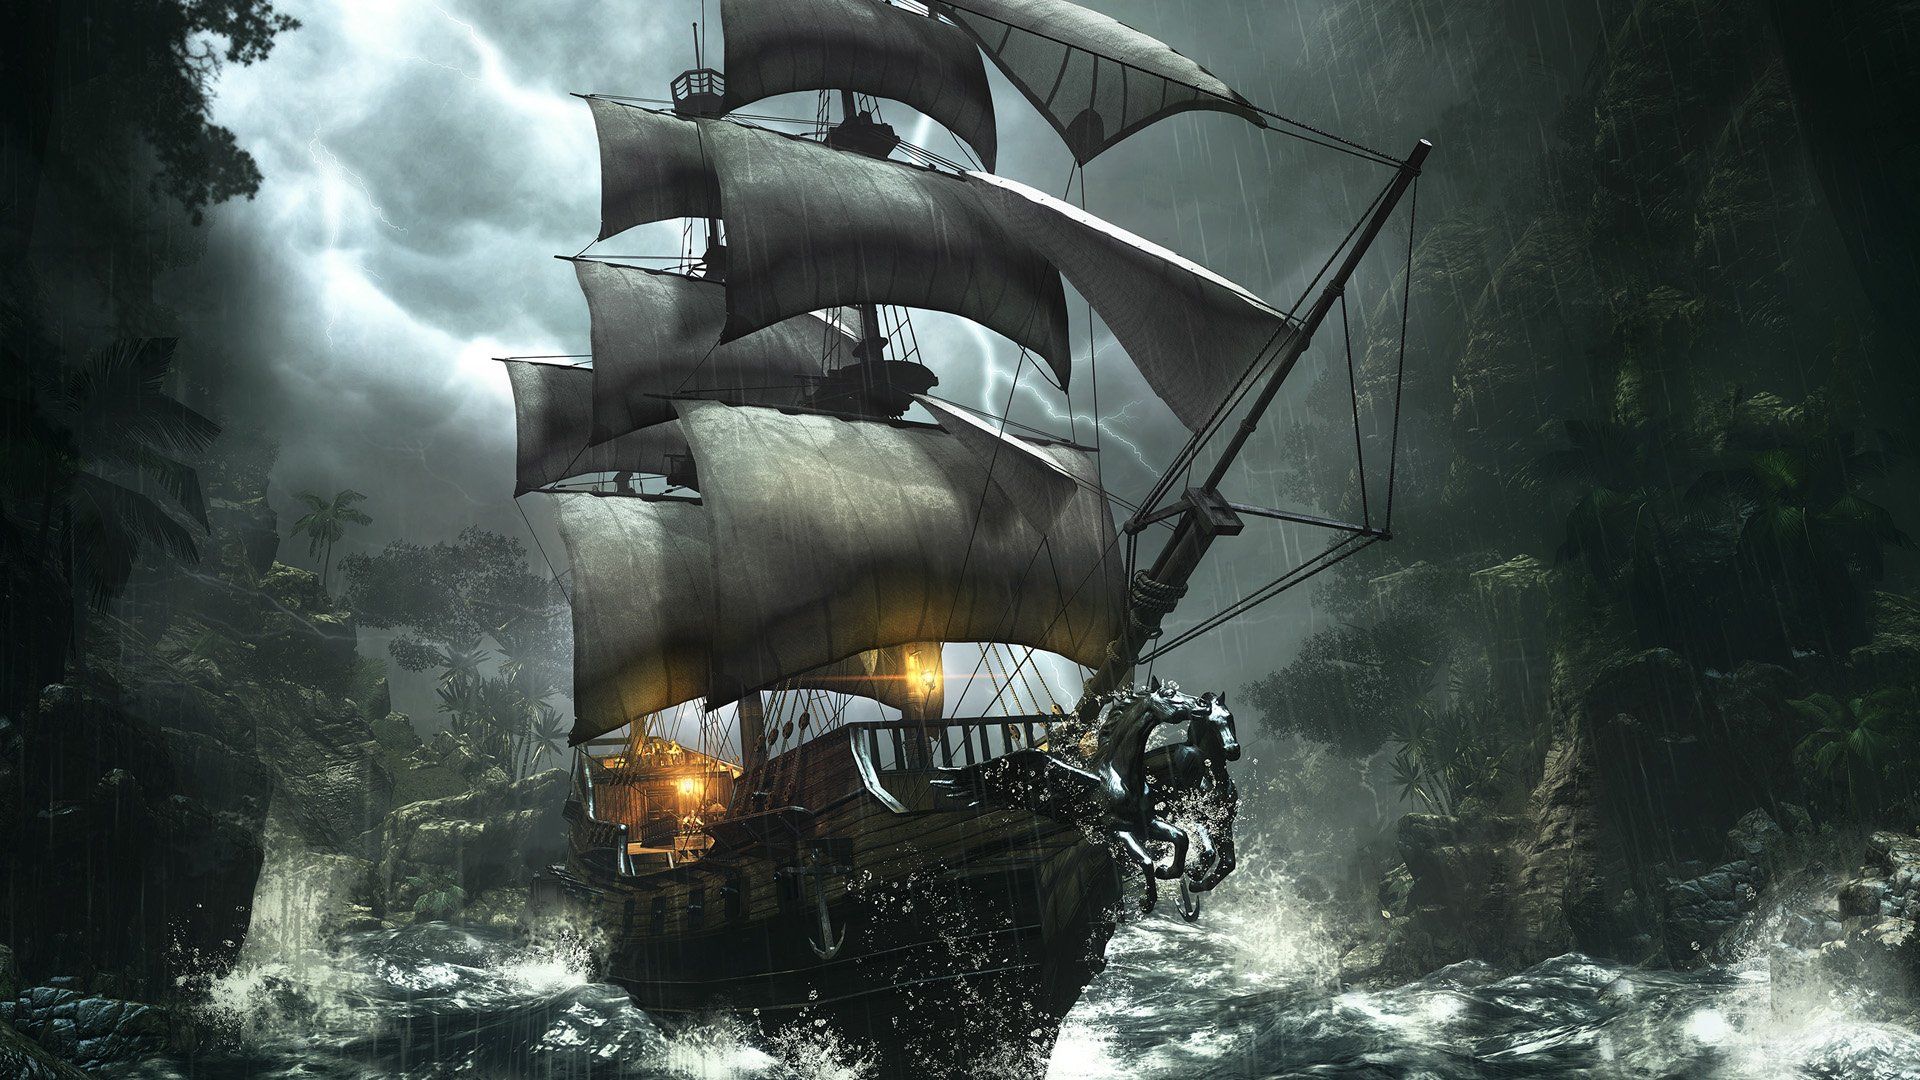 Pirate Ship Pirates - Free photo on Pixabay - Pixabay